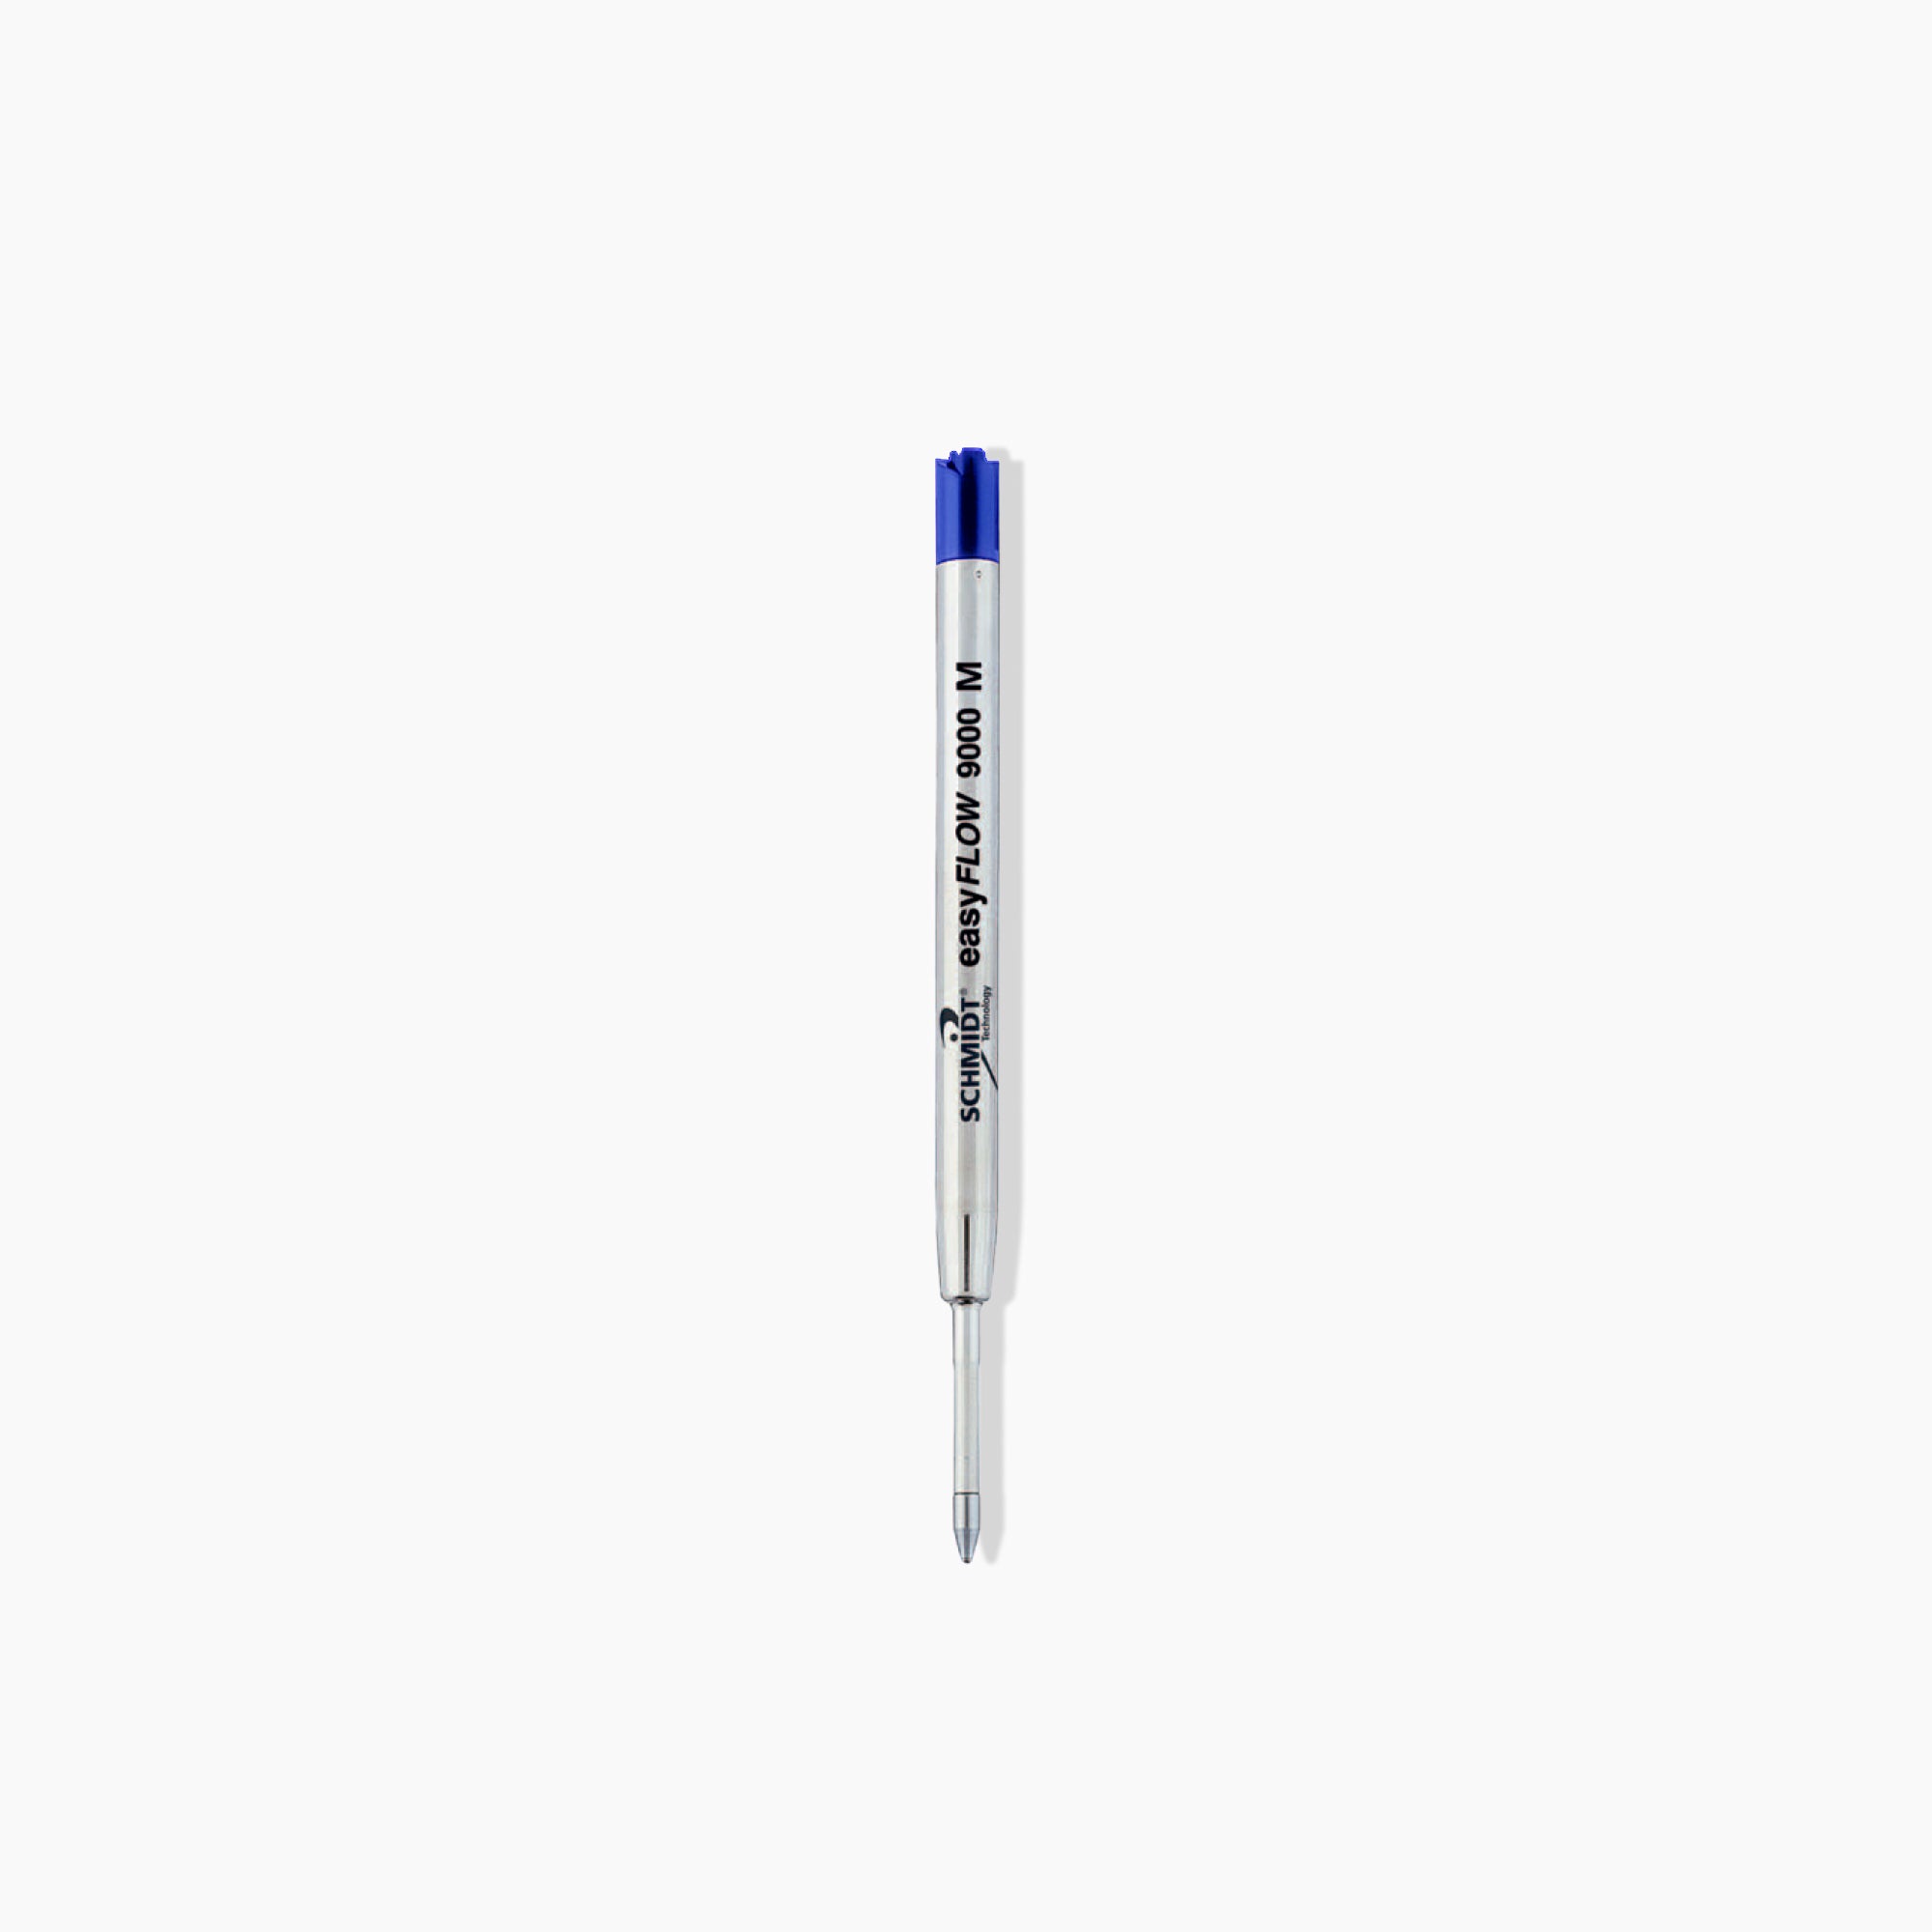 Schmidt easyFLOW 9000 Partker G2 style pen refill